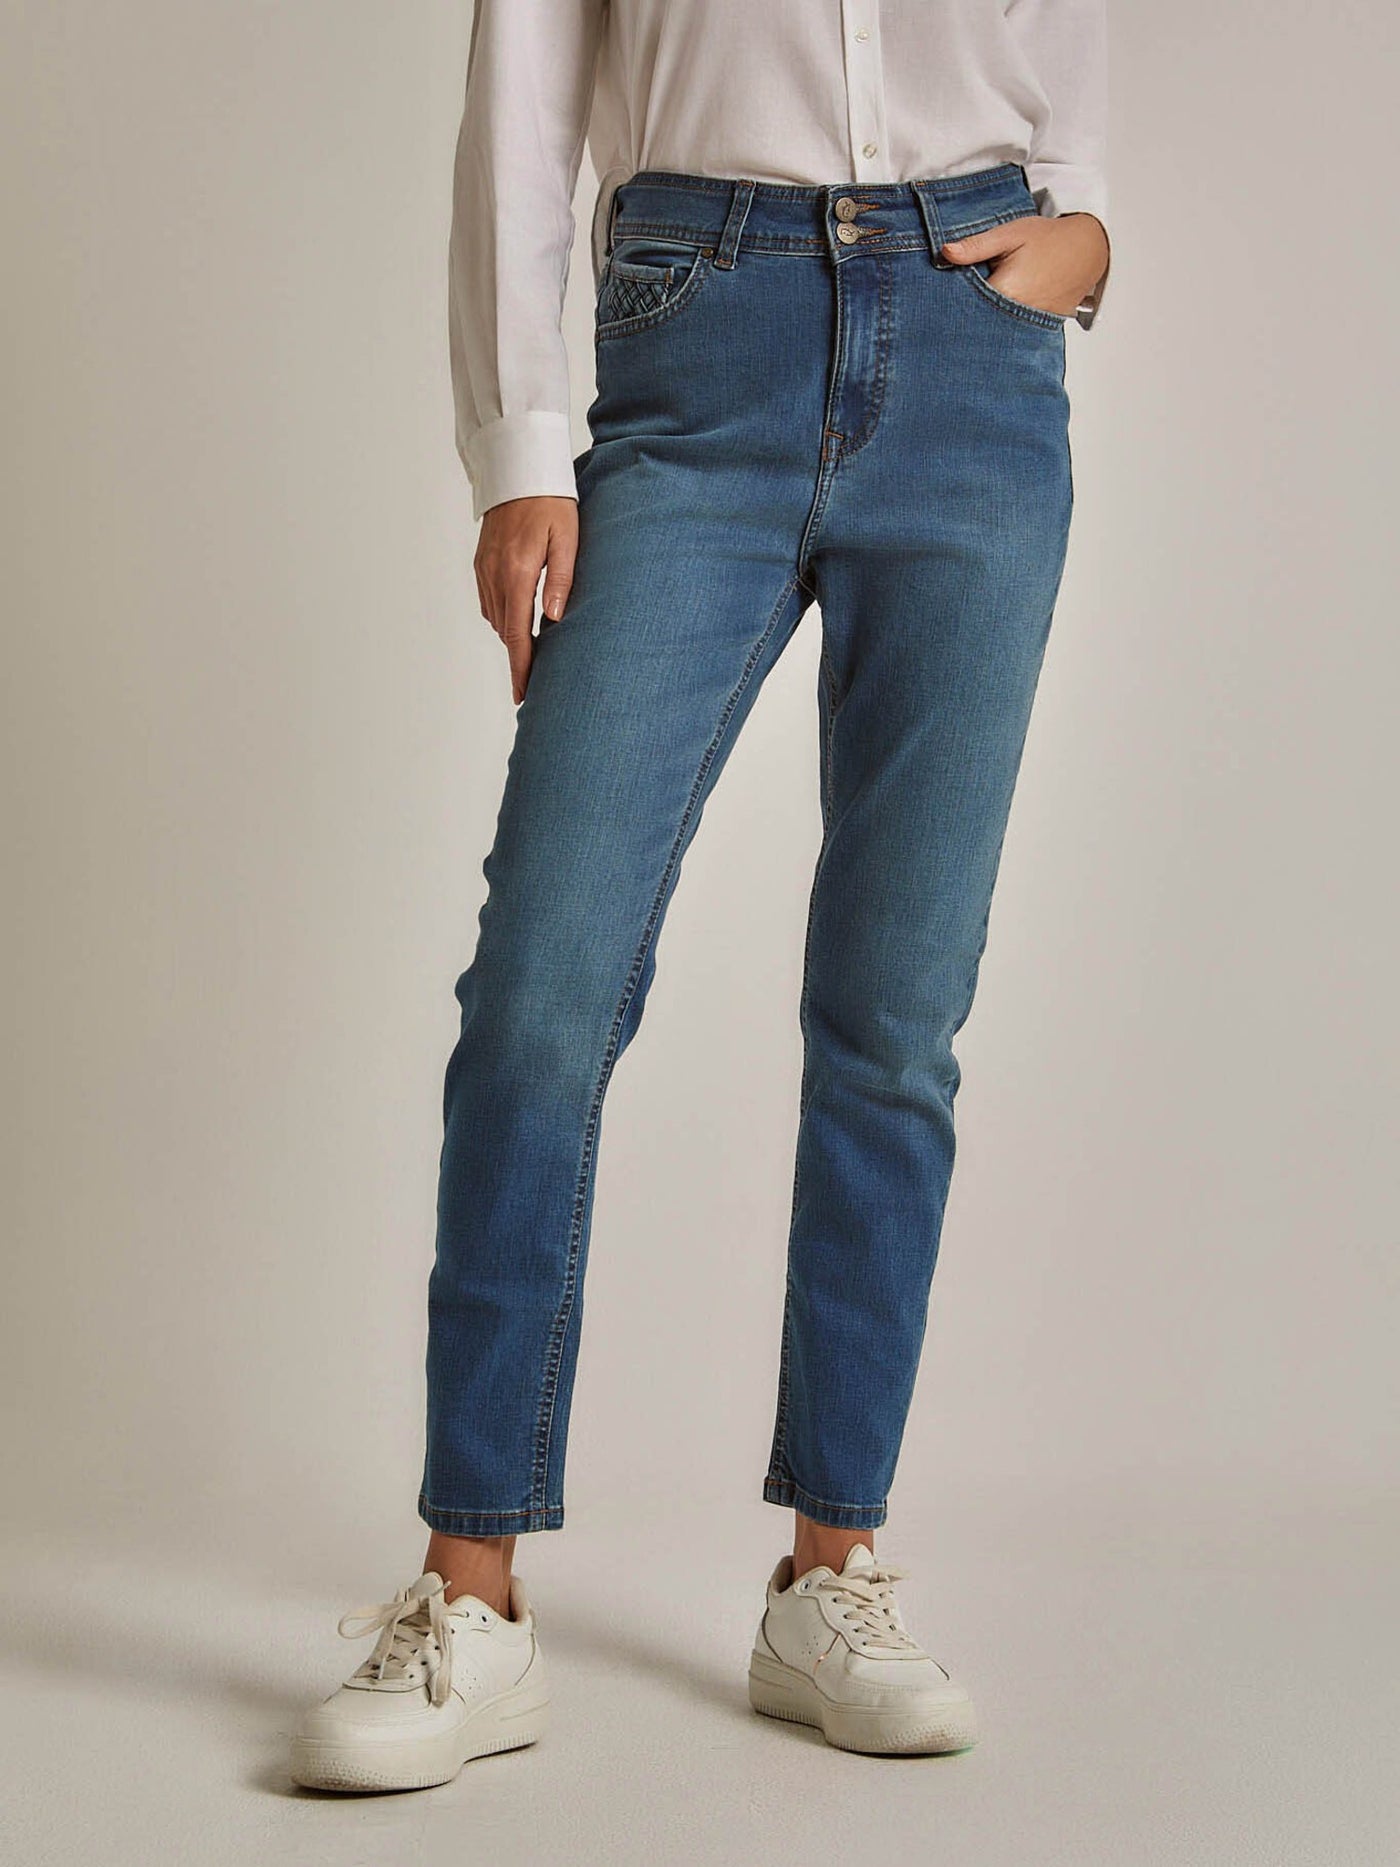 Jeans - Skinny Fit - High Waist